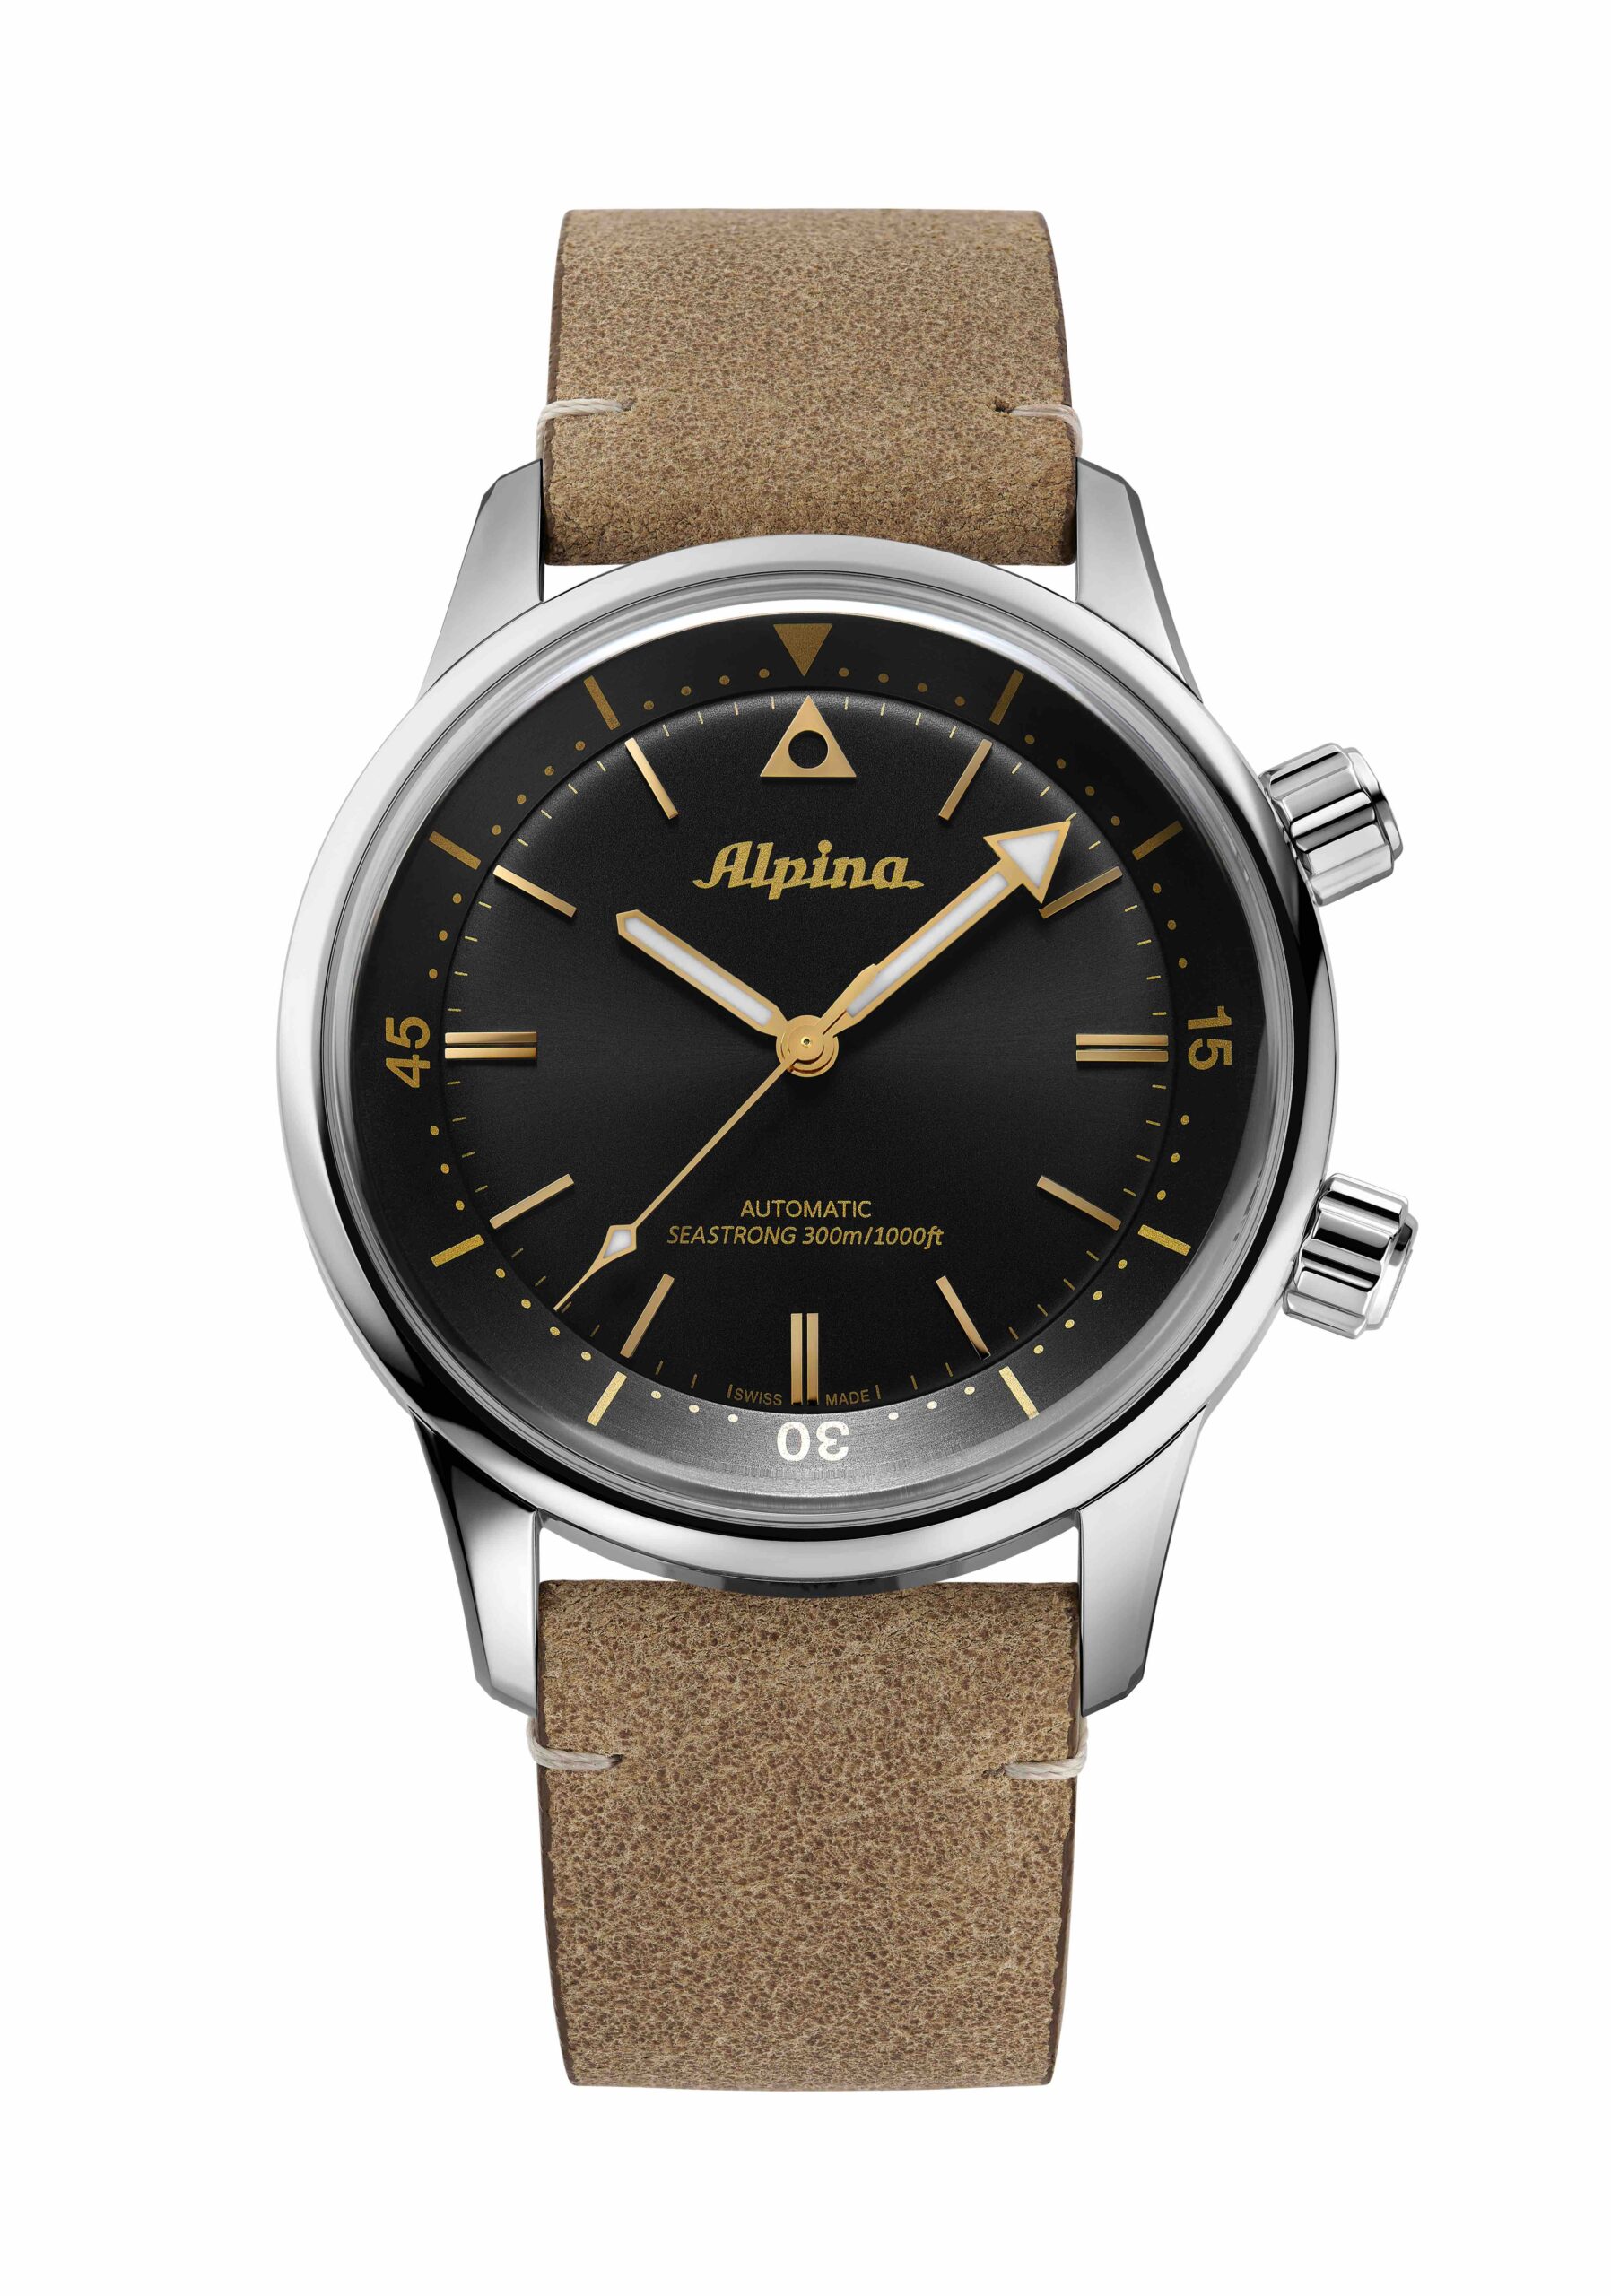 Alpina Updates Heritage Dive & Pilot Models